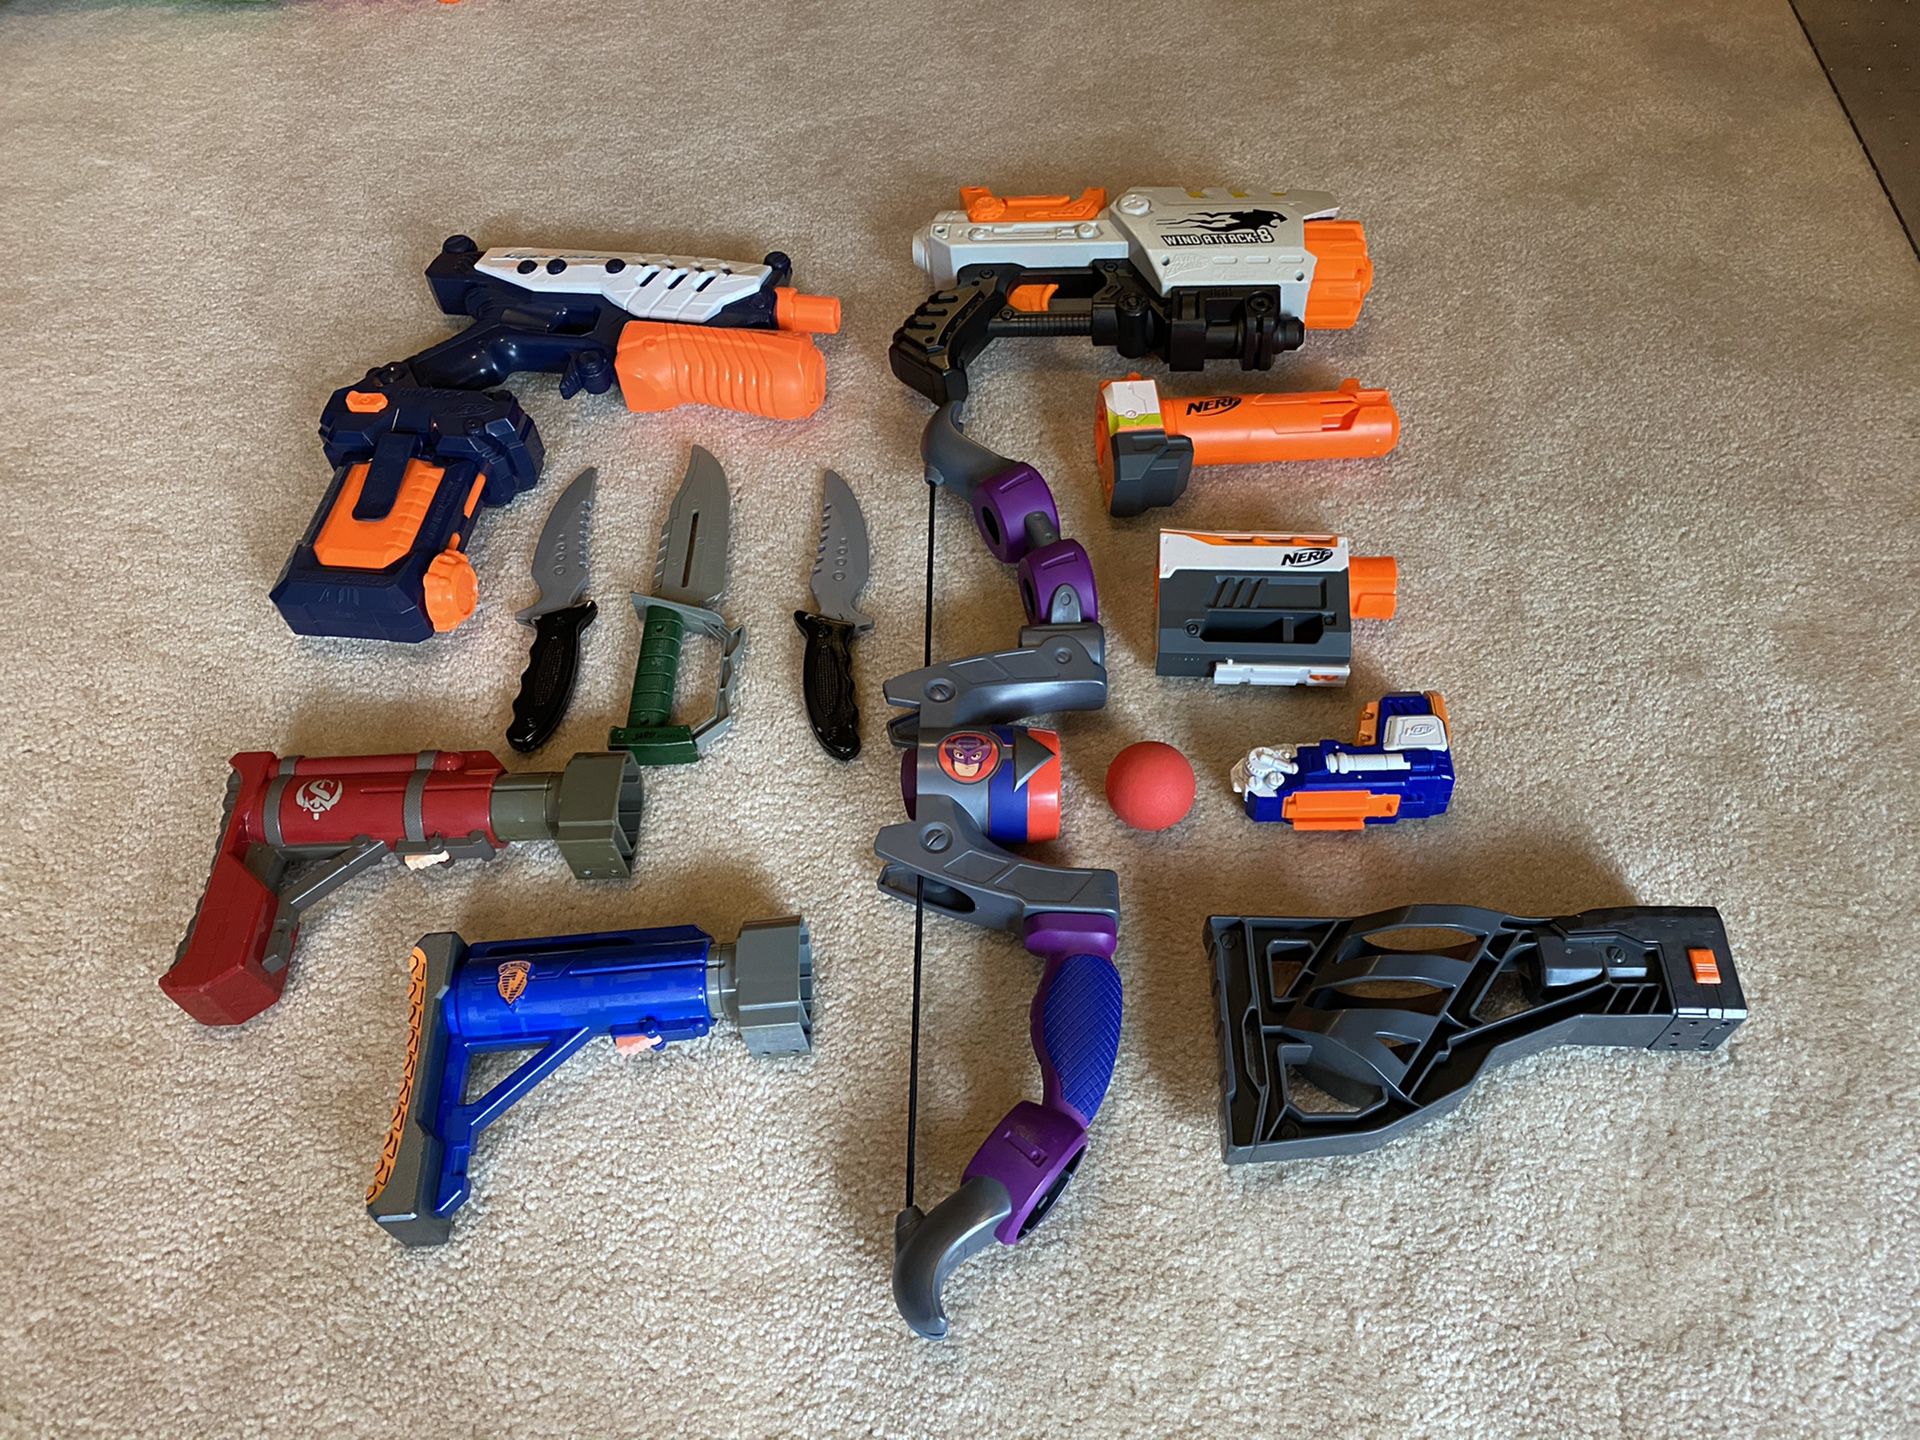 Gun Toys for Kids, 1 Bullet Gun, 1 Water Gun, 1 Ball Shooting Bow and Arrow, 3 Play Knifes, 6 Nerf Gun Accesories, $100 Value